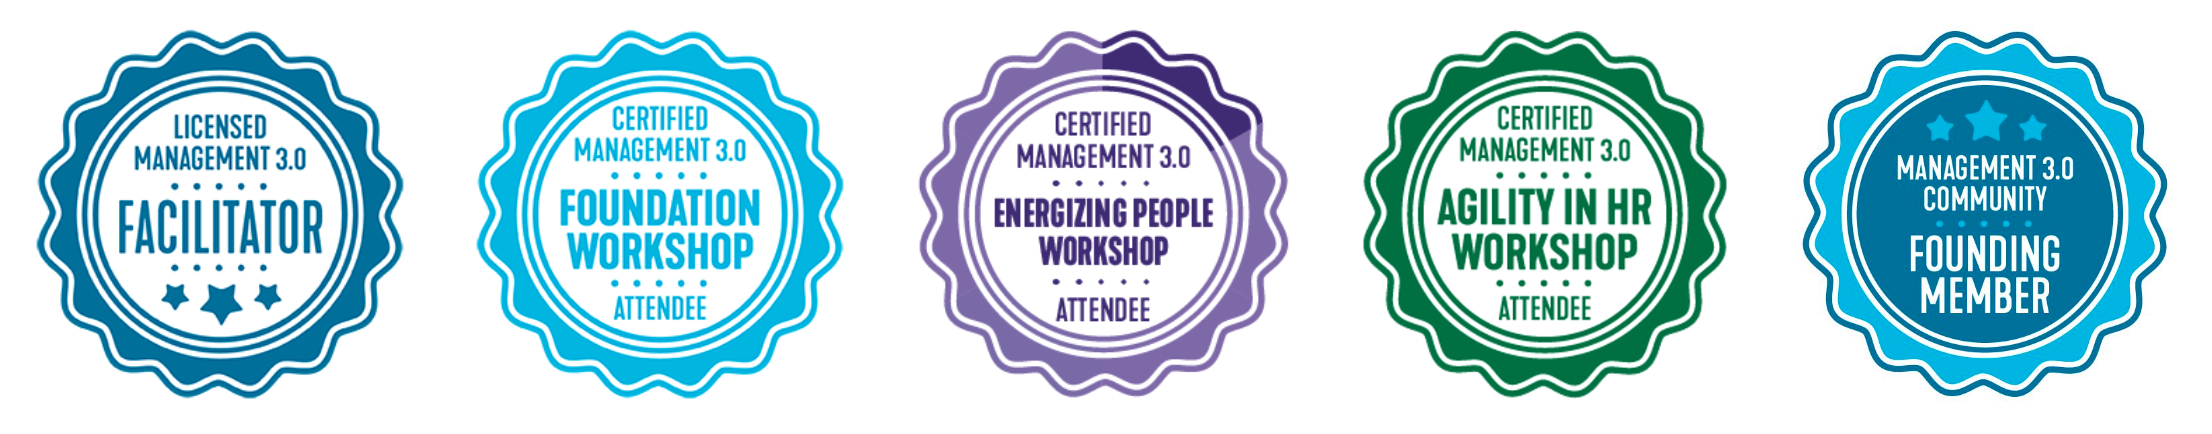 Management 3.0 badges